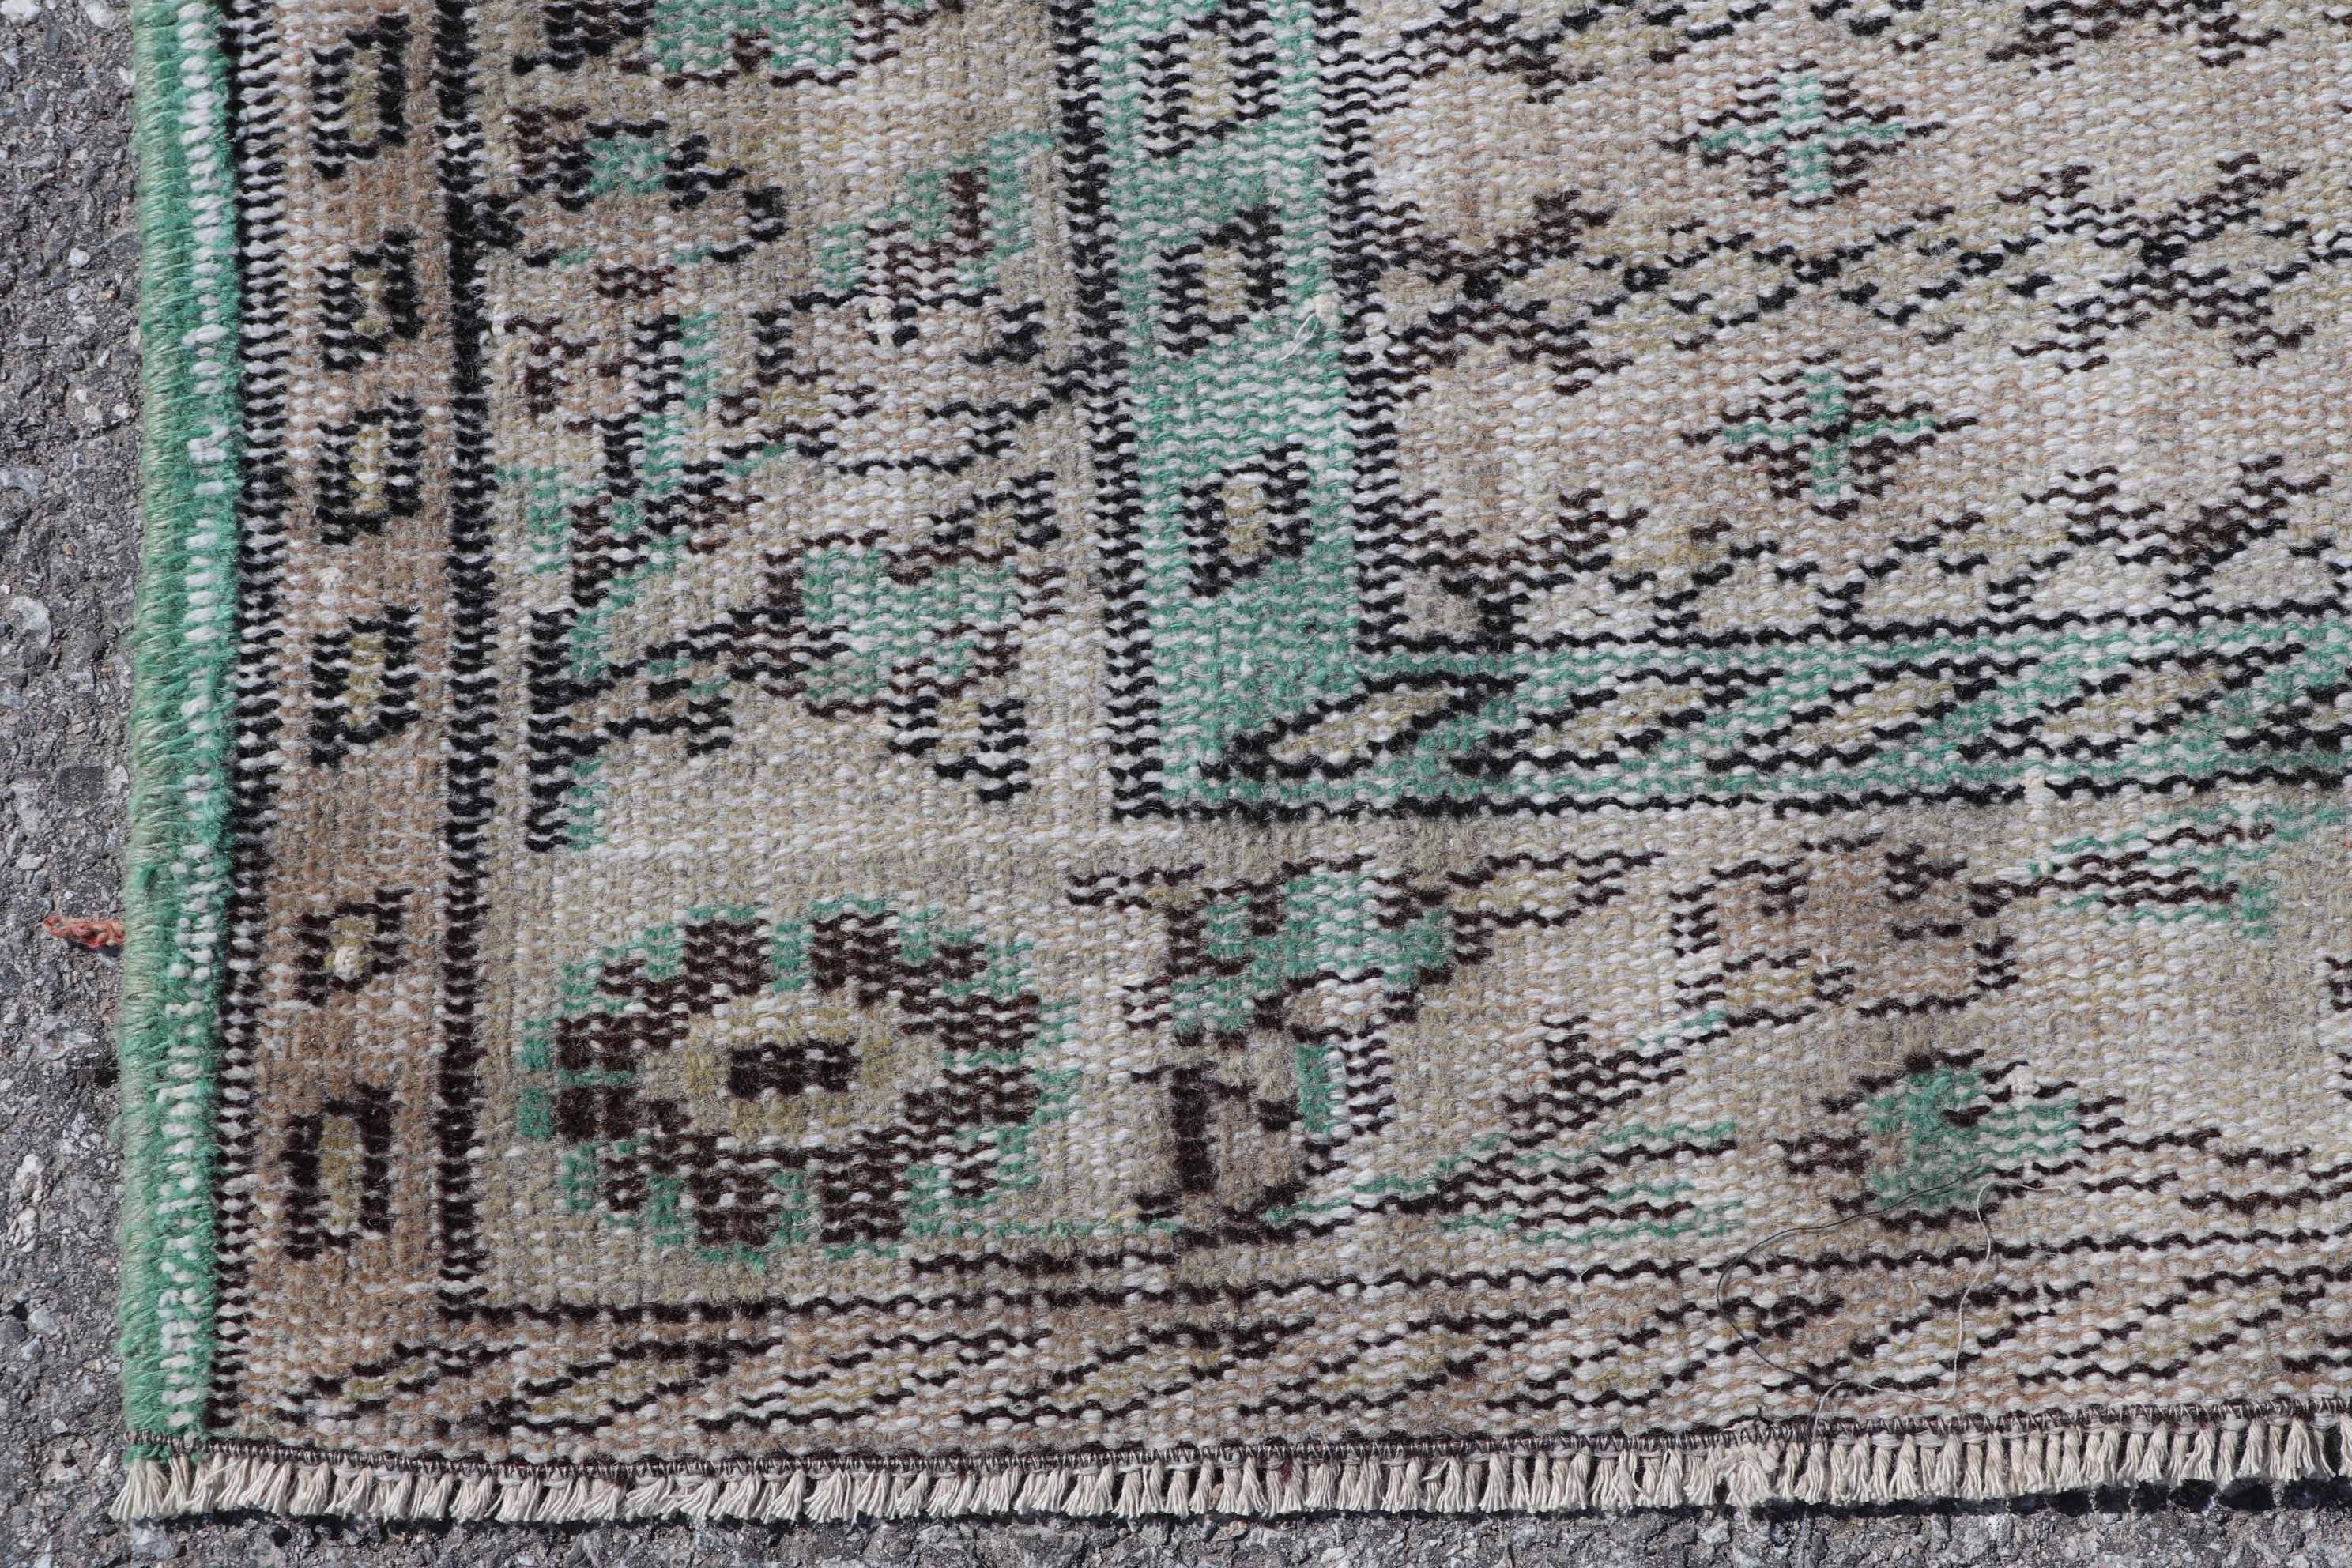 Dining Room Rugs, Turkish Rug, Bedroom Rug, Oriental Rugs, Green Anatolian Rug, Vintage Rugs, Dorm Rug, 5.8x9.2 ft Large Rugs